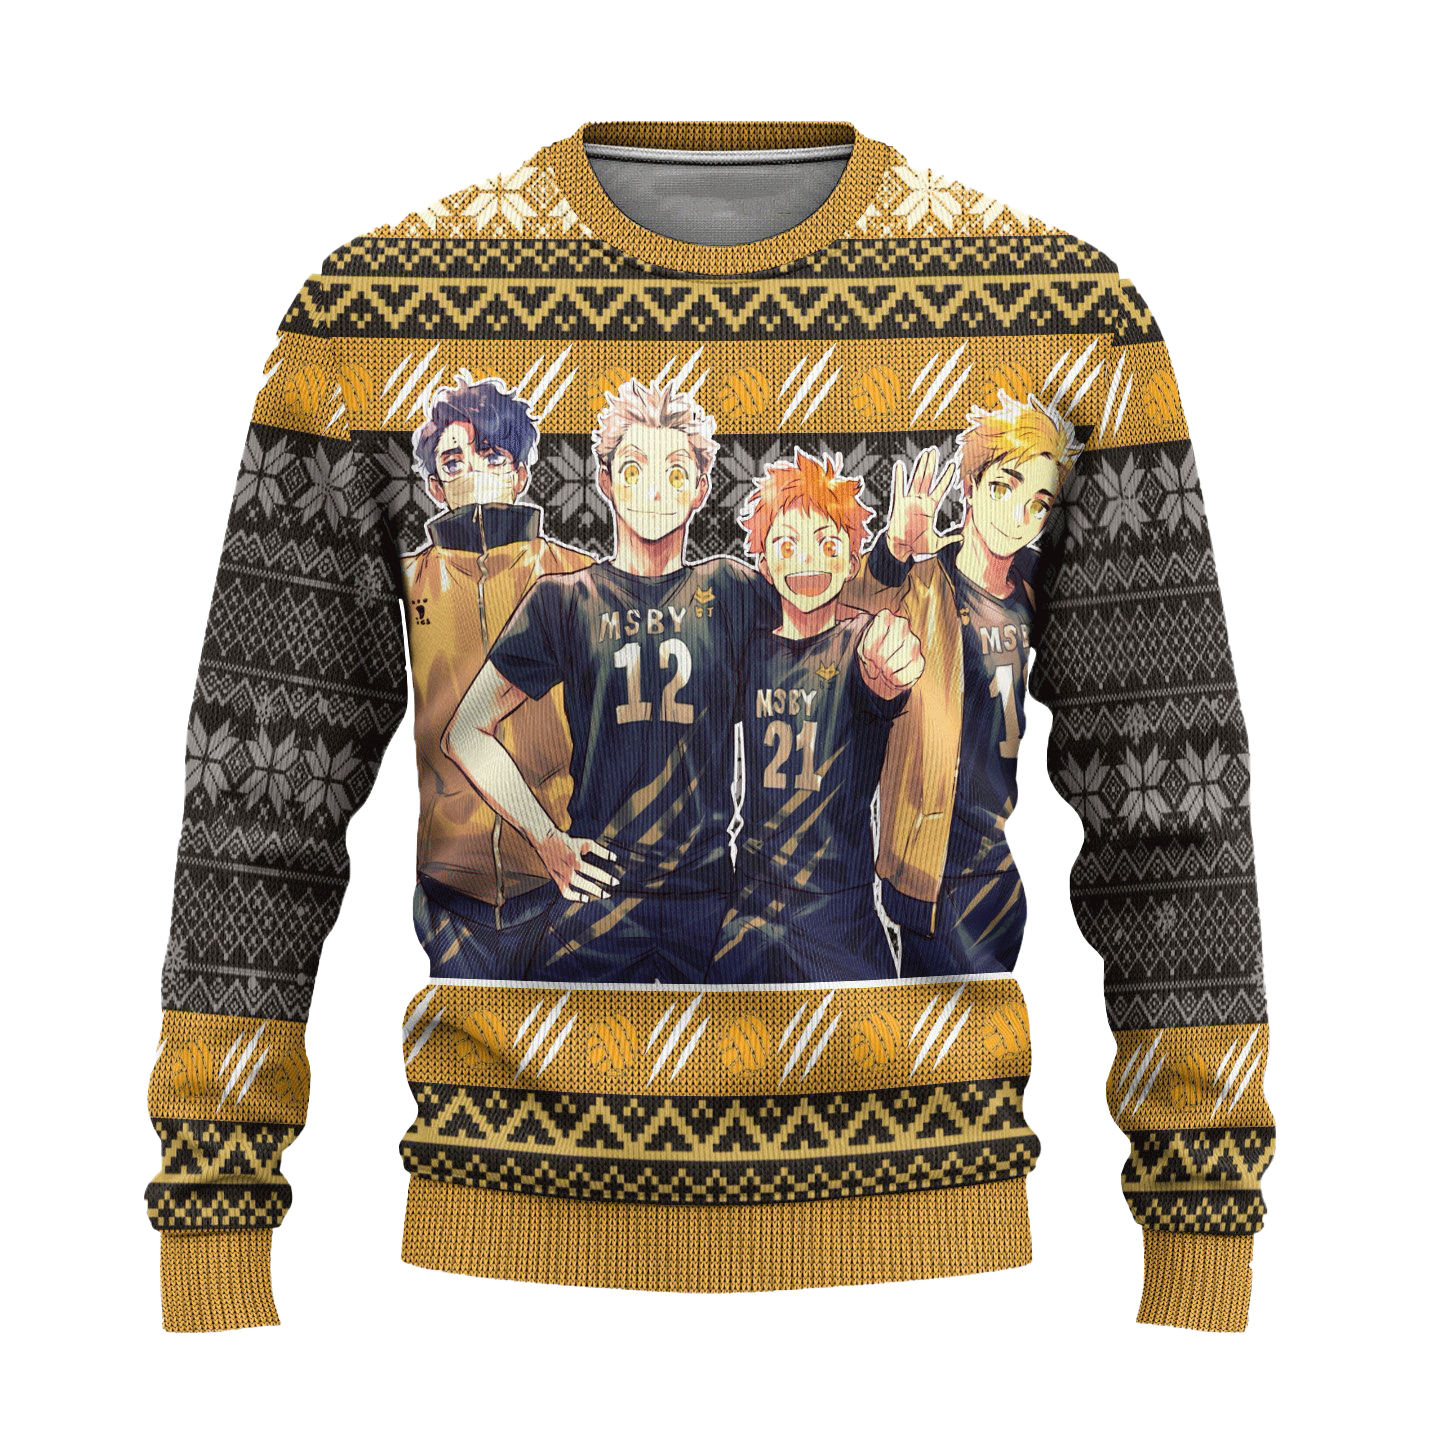 MSBY Black Jackal Ugly Christmas Sweater Haikyuu Anime Xmas Gift